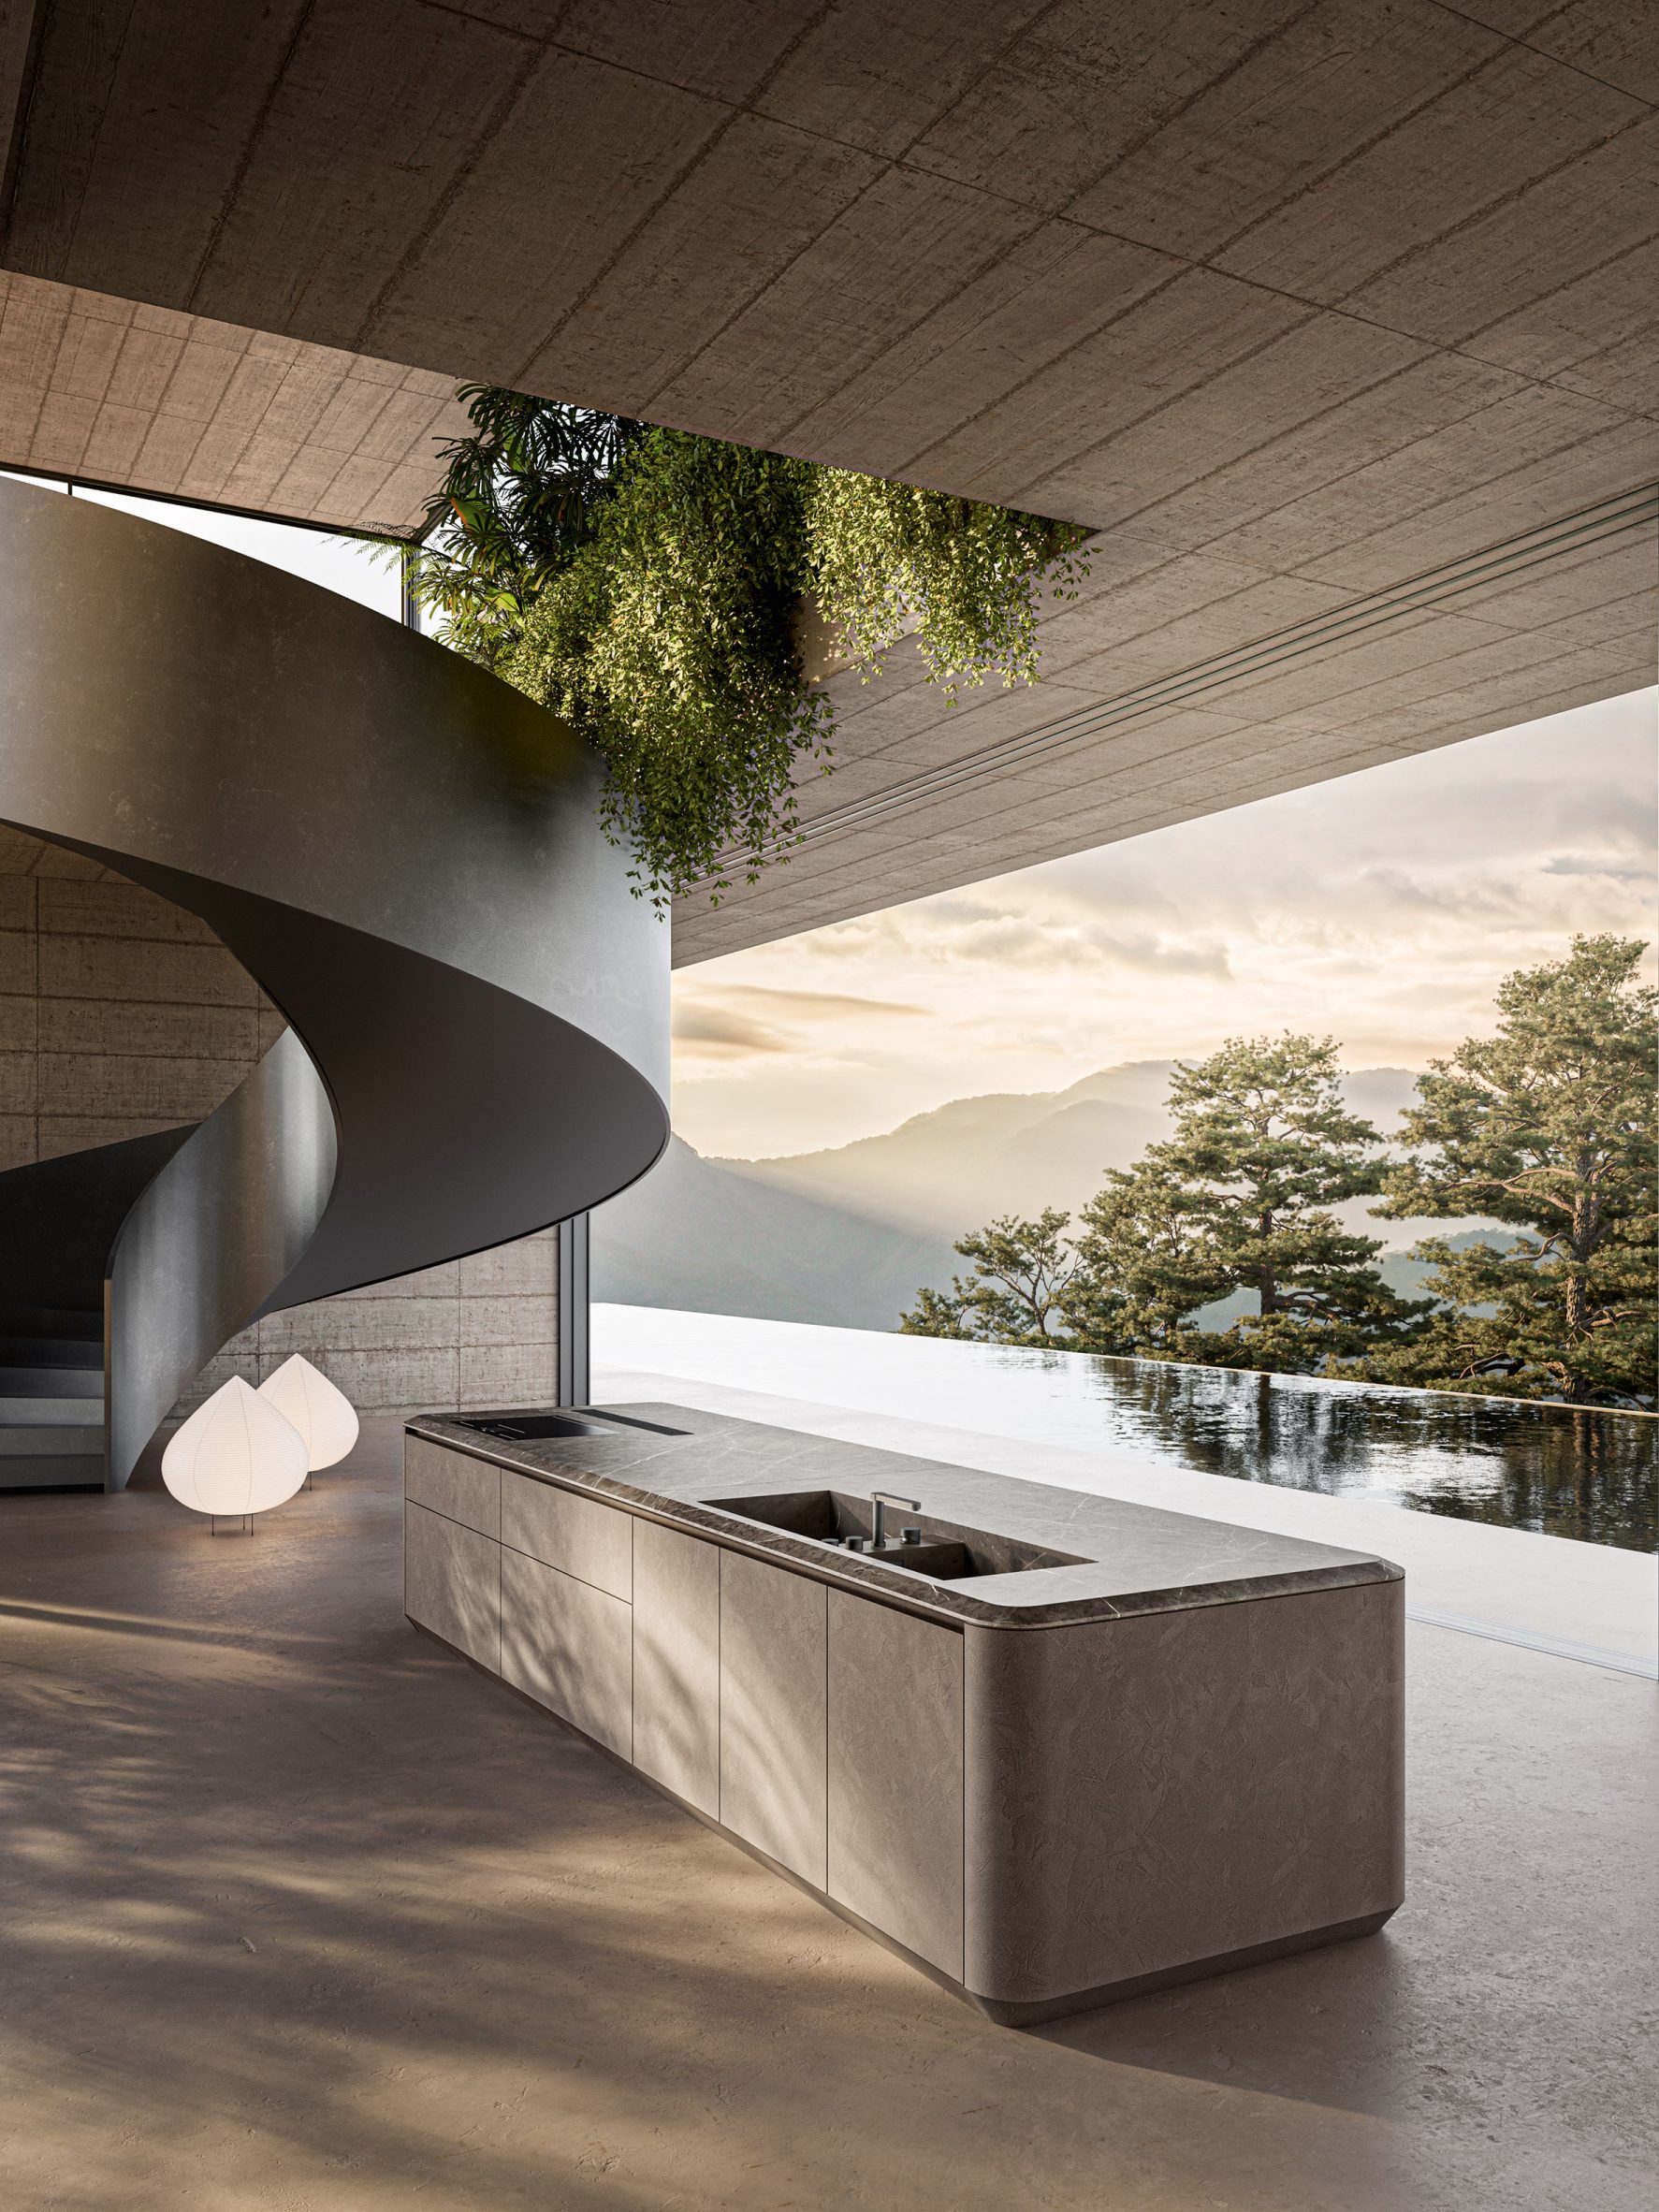 A grey kitchen island created by Zaha Hadid Design